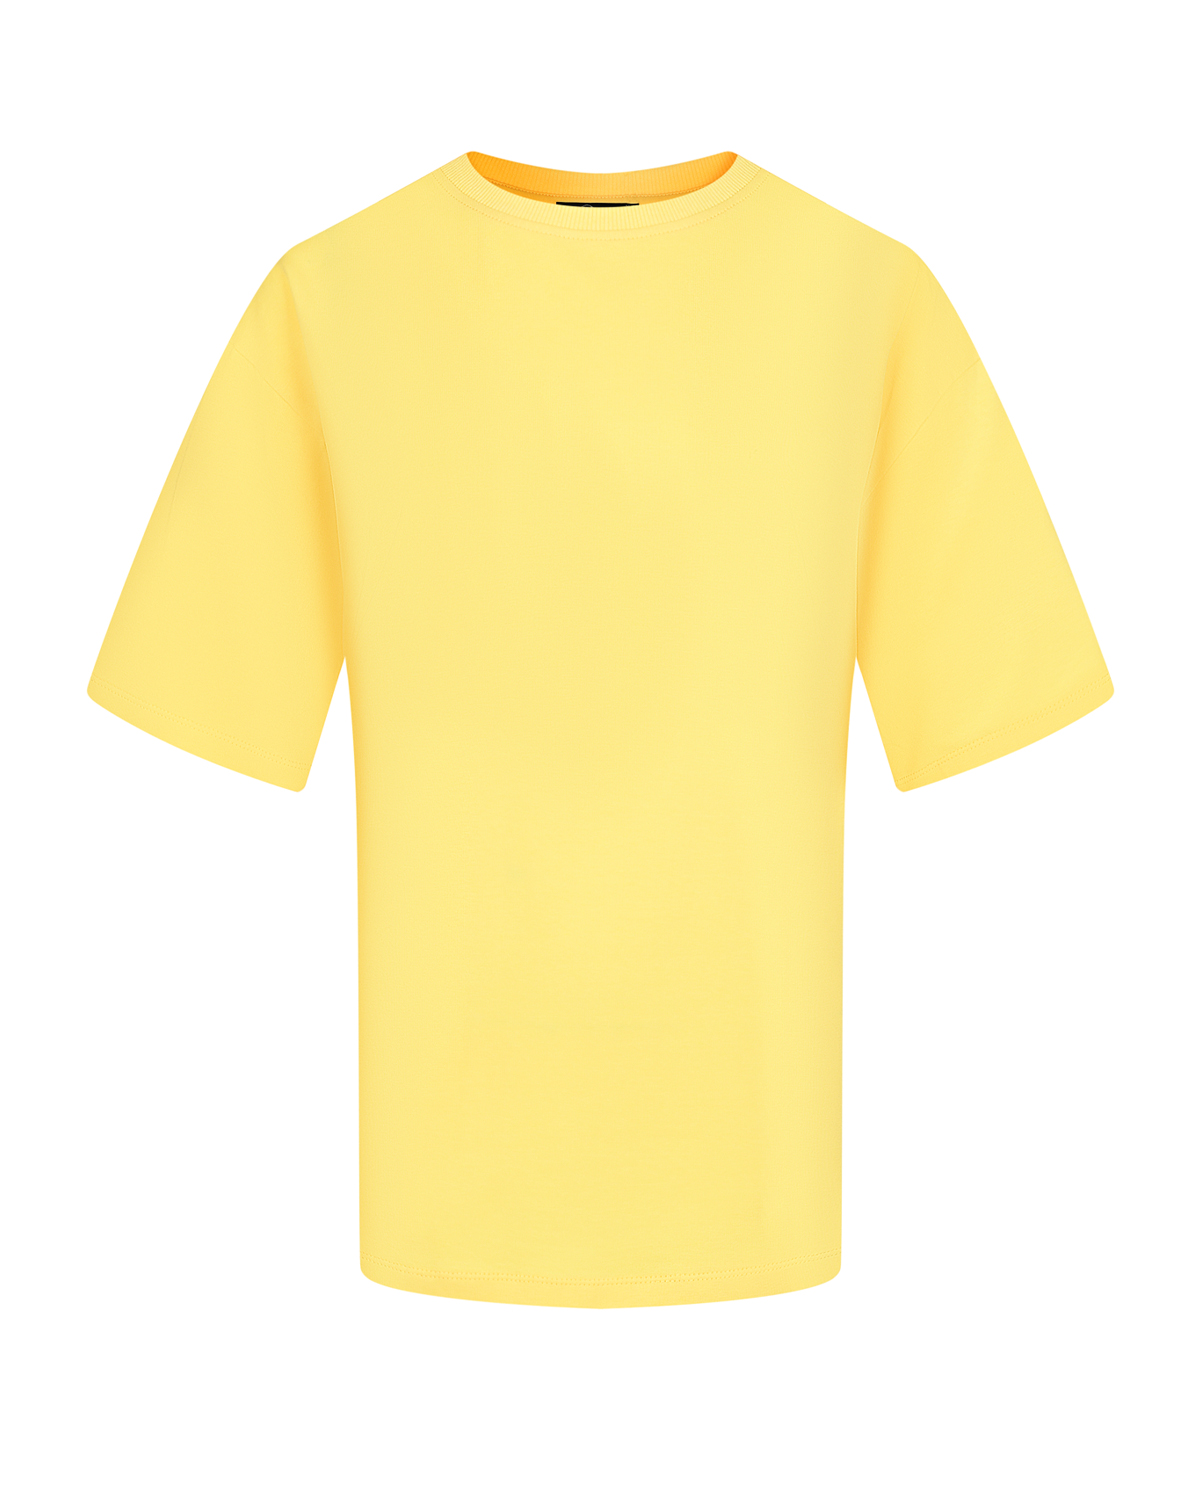 Желтая футболка oversize Dan Maralex, размер 42, цвет желтый - фото 1